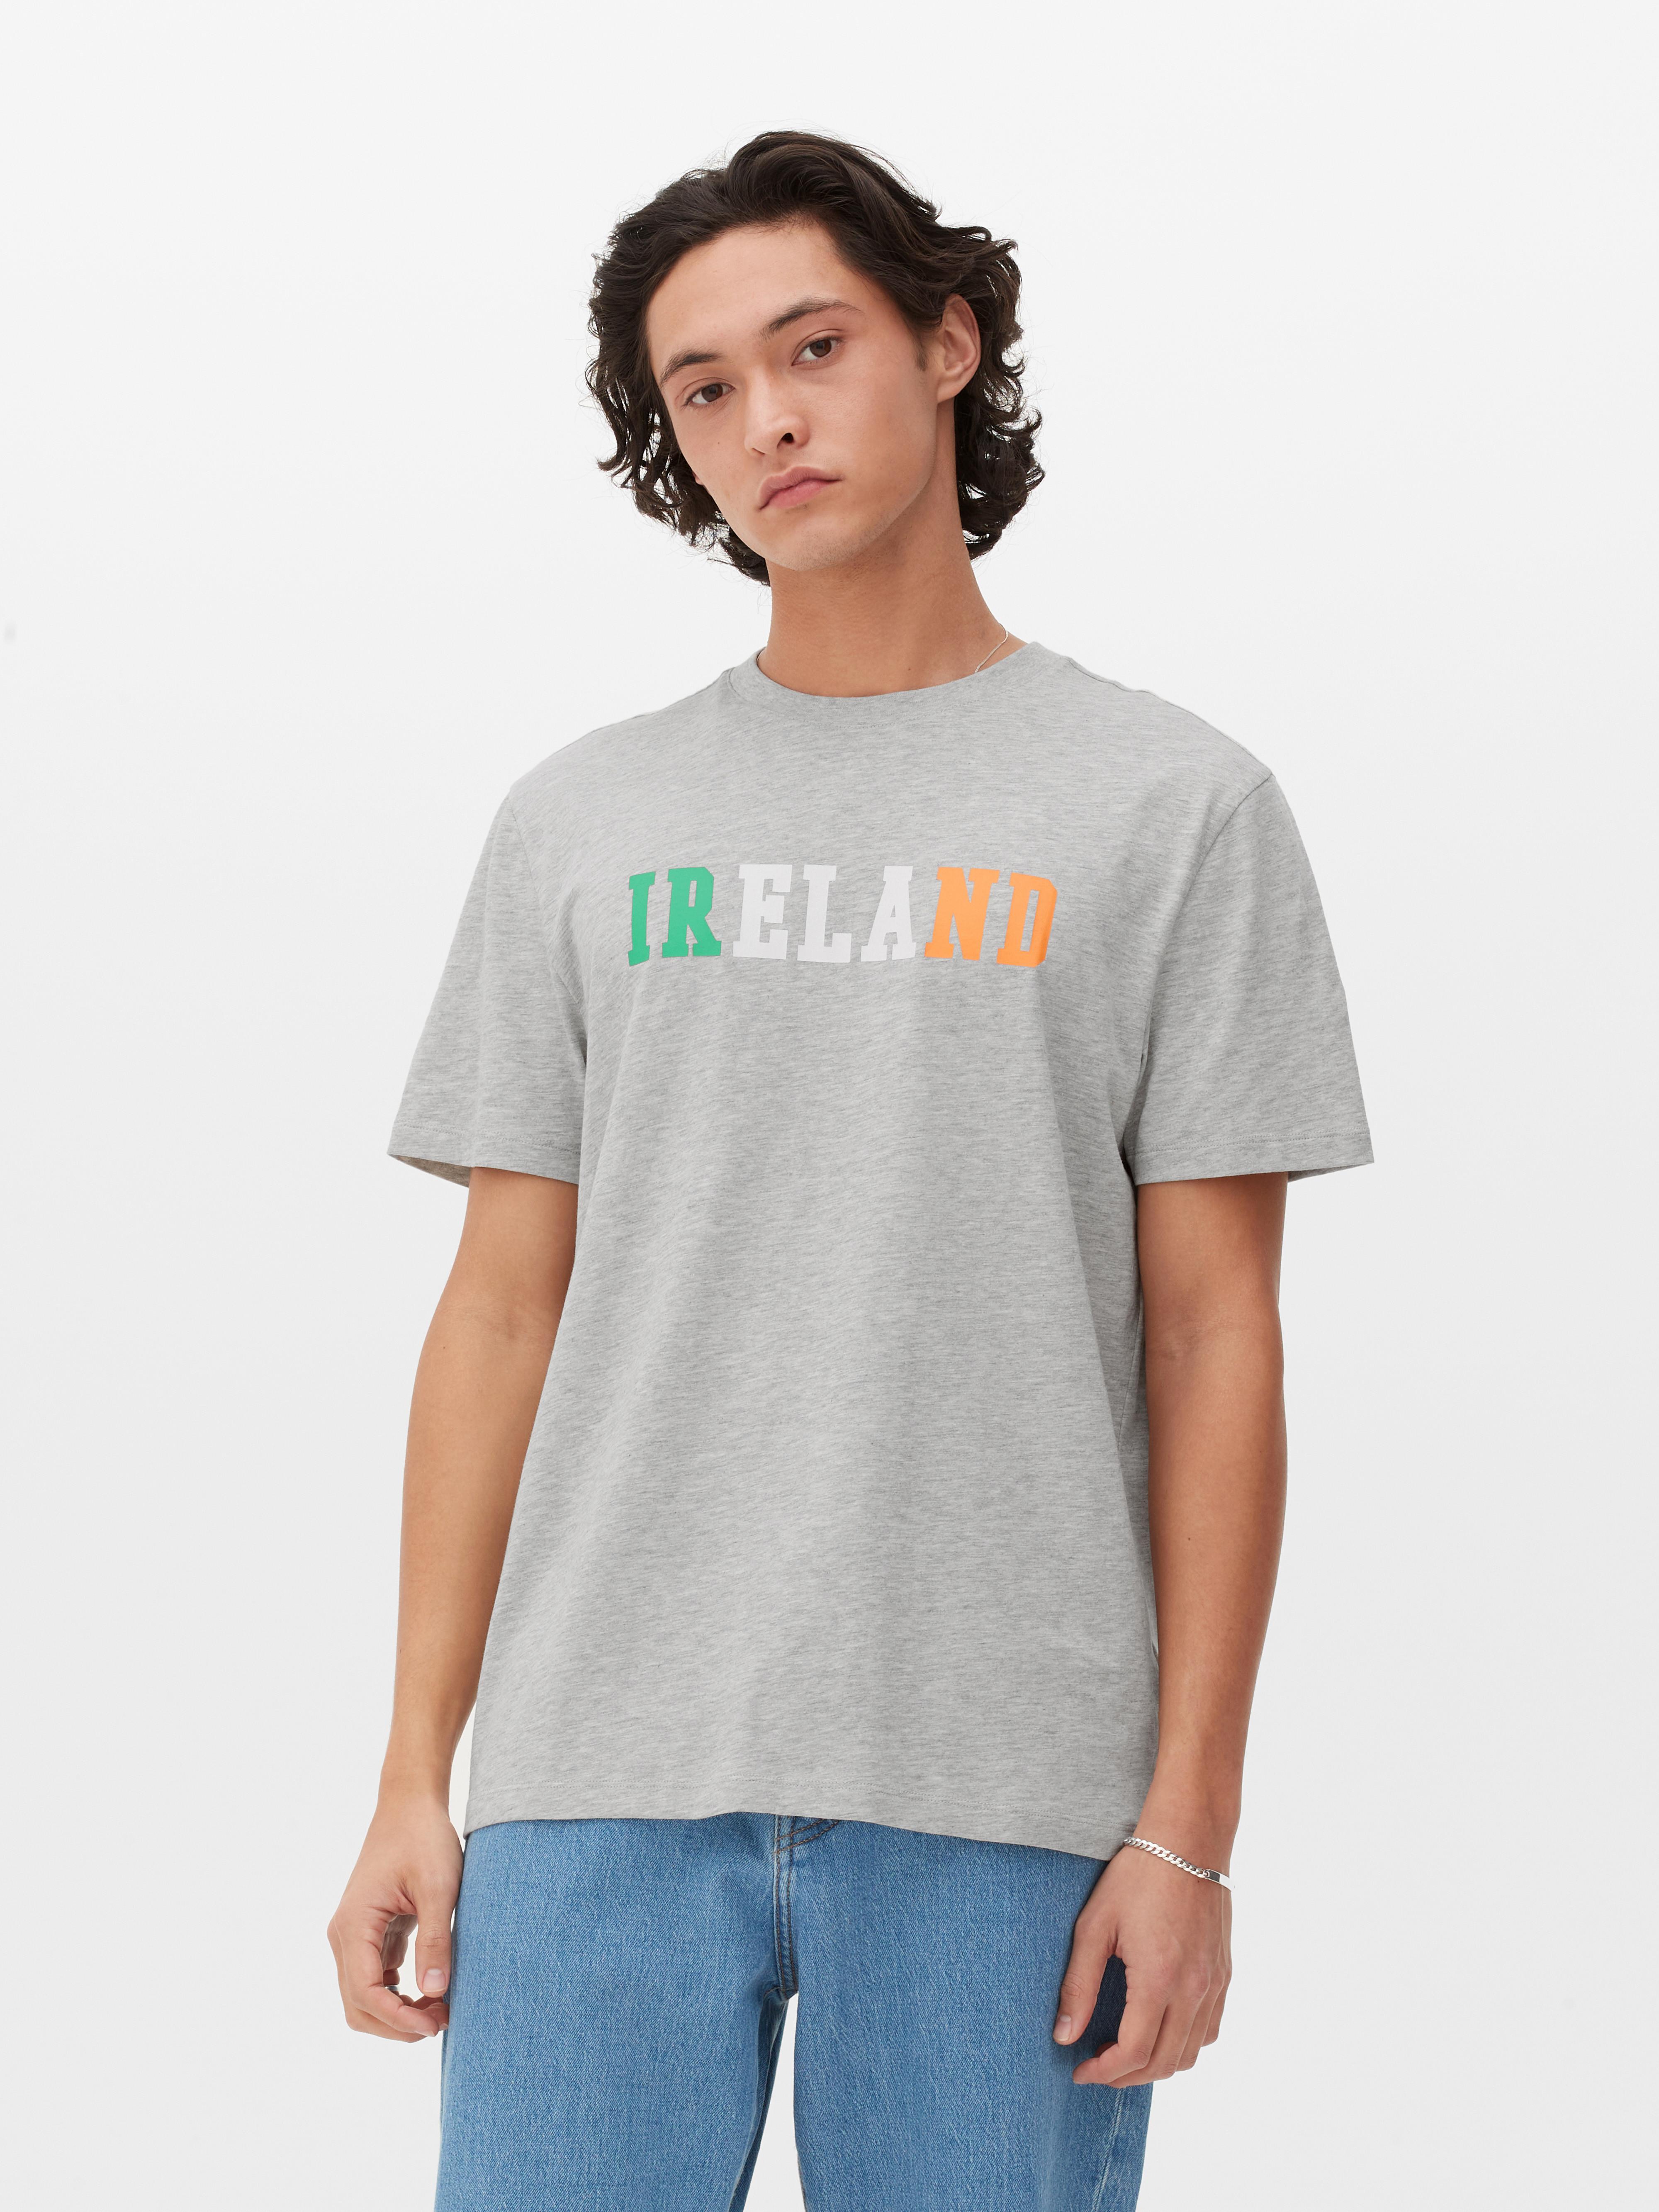 Ireland Short Sleeve T-shirt